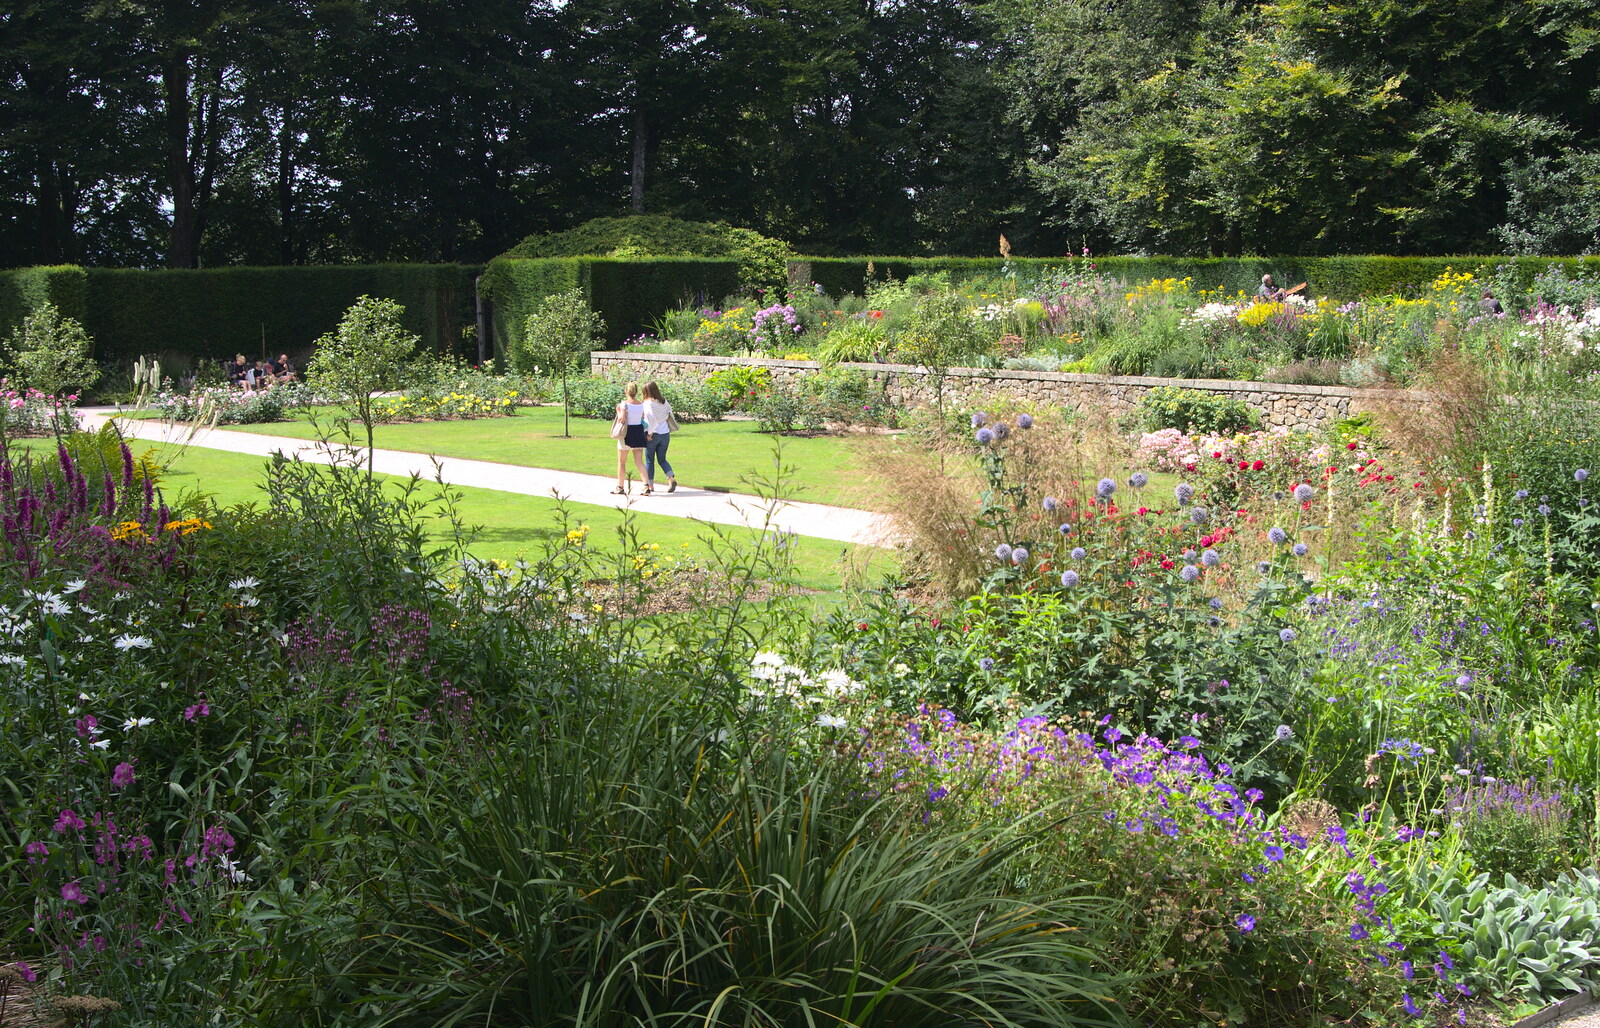 The formal gardens of Drogo from The Tom Cobley and Castle Drogo, Spreyton and Drewsteignton, Devon - 11th August 2016